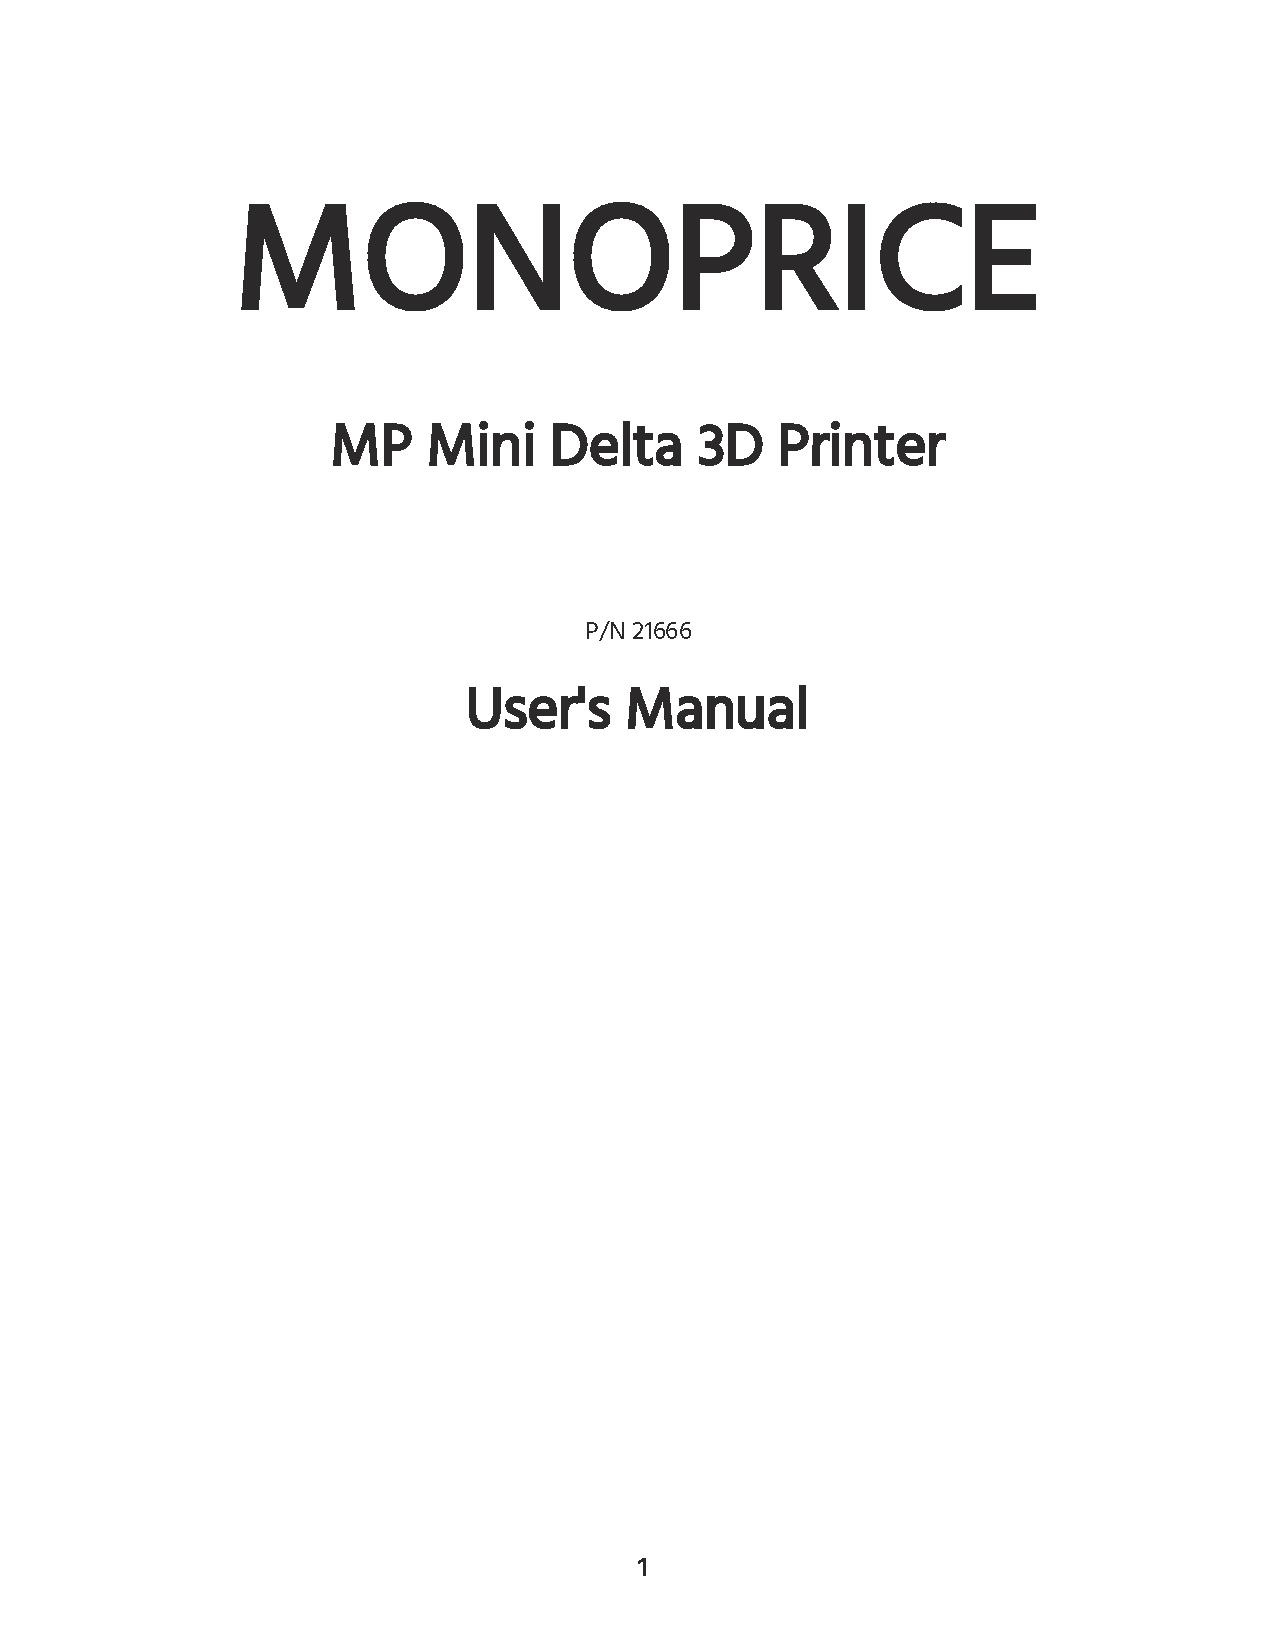 Manual.pdf